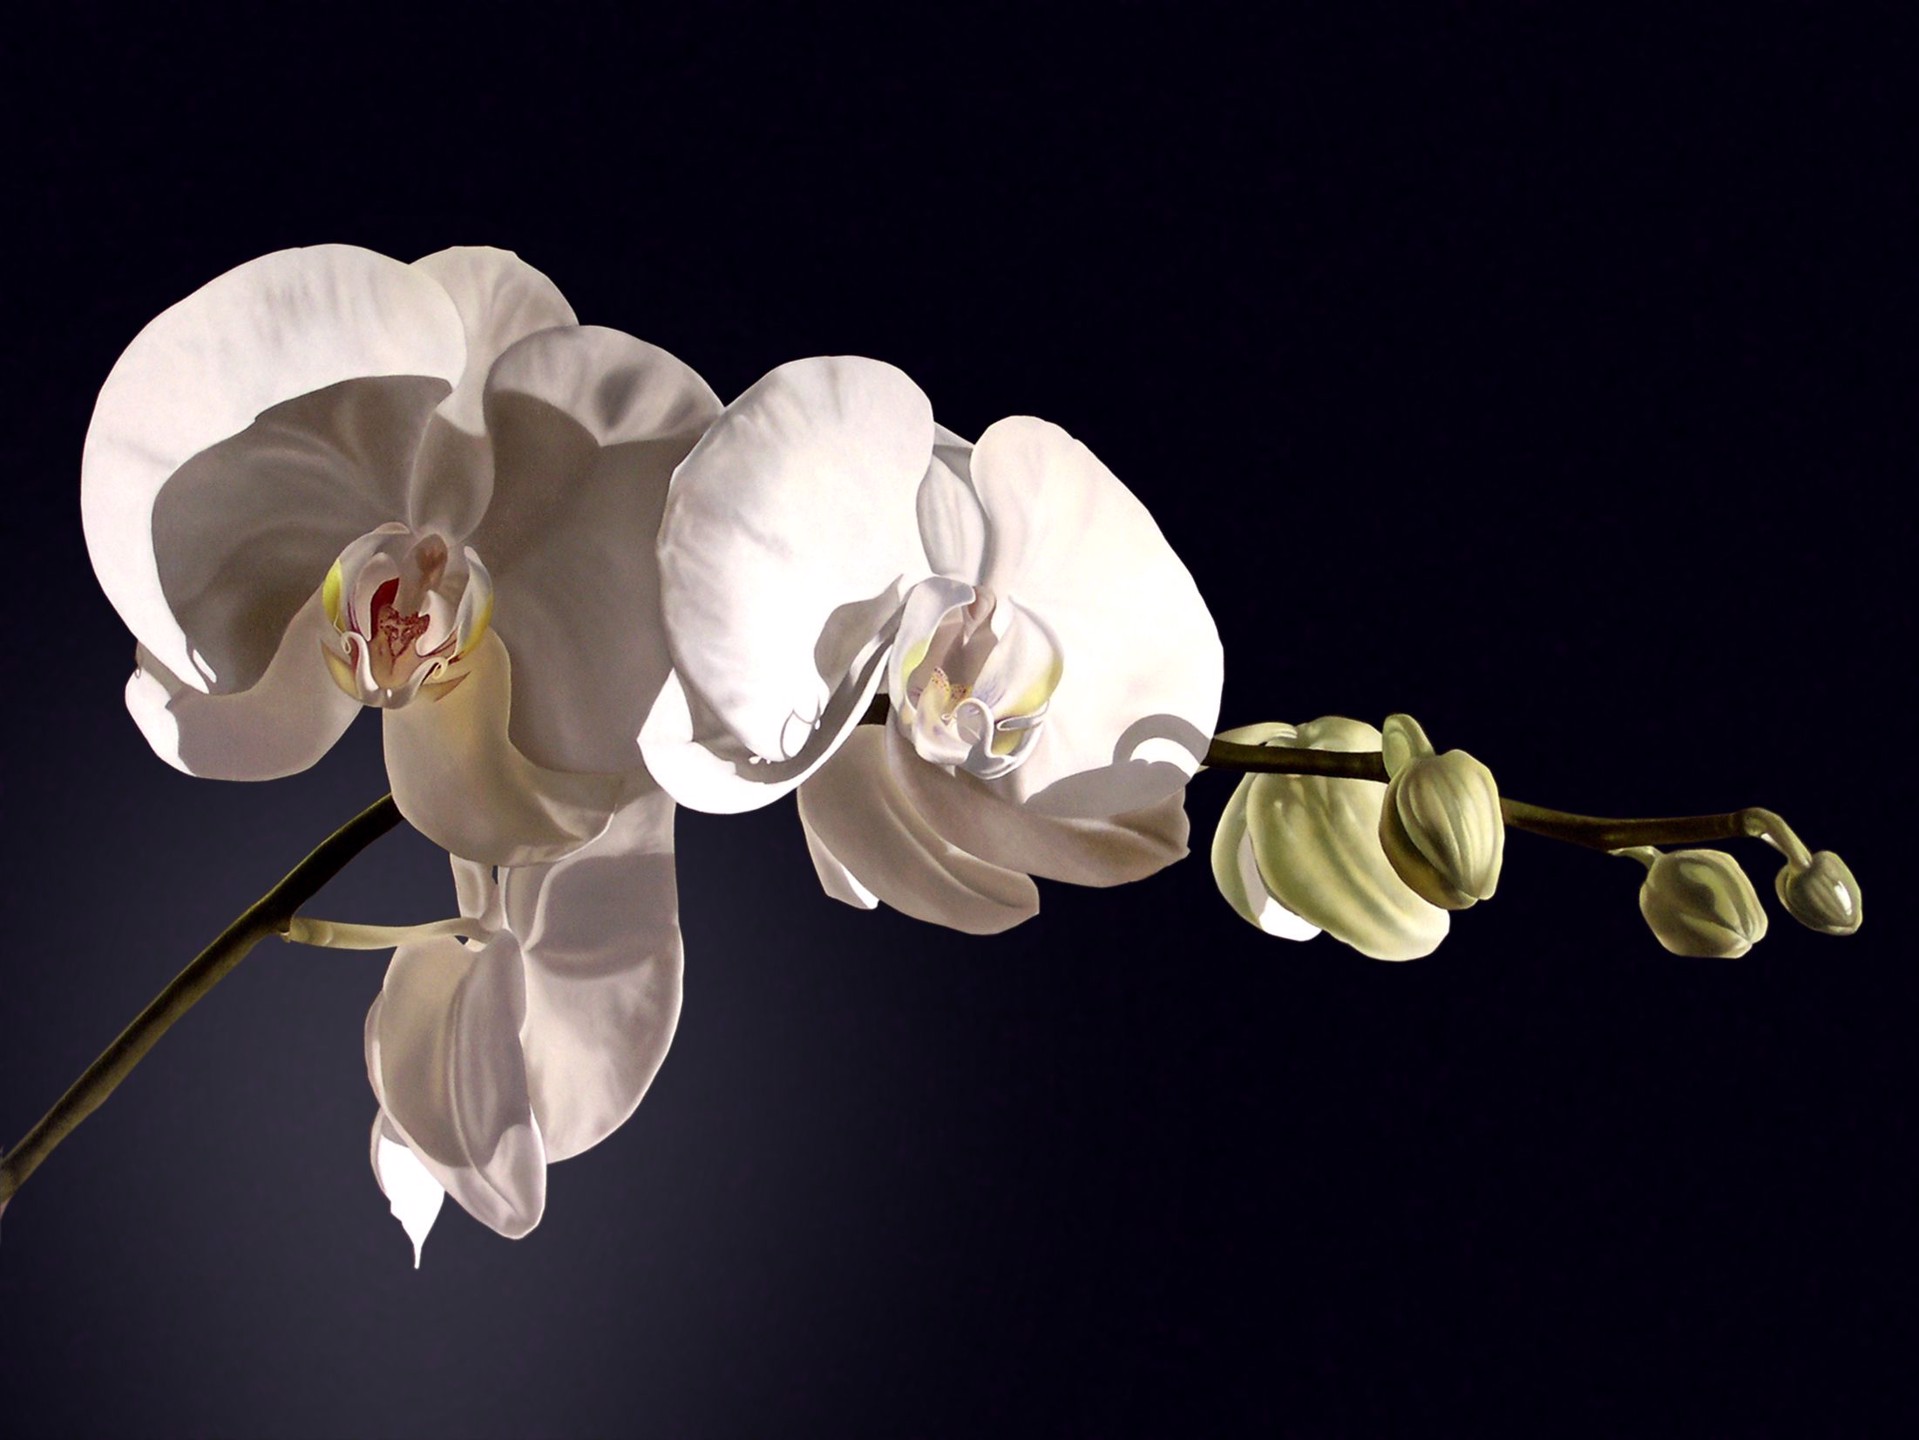 Orchid Dream by Adriana Molea